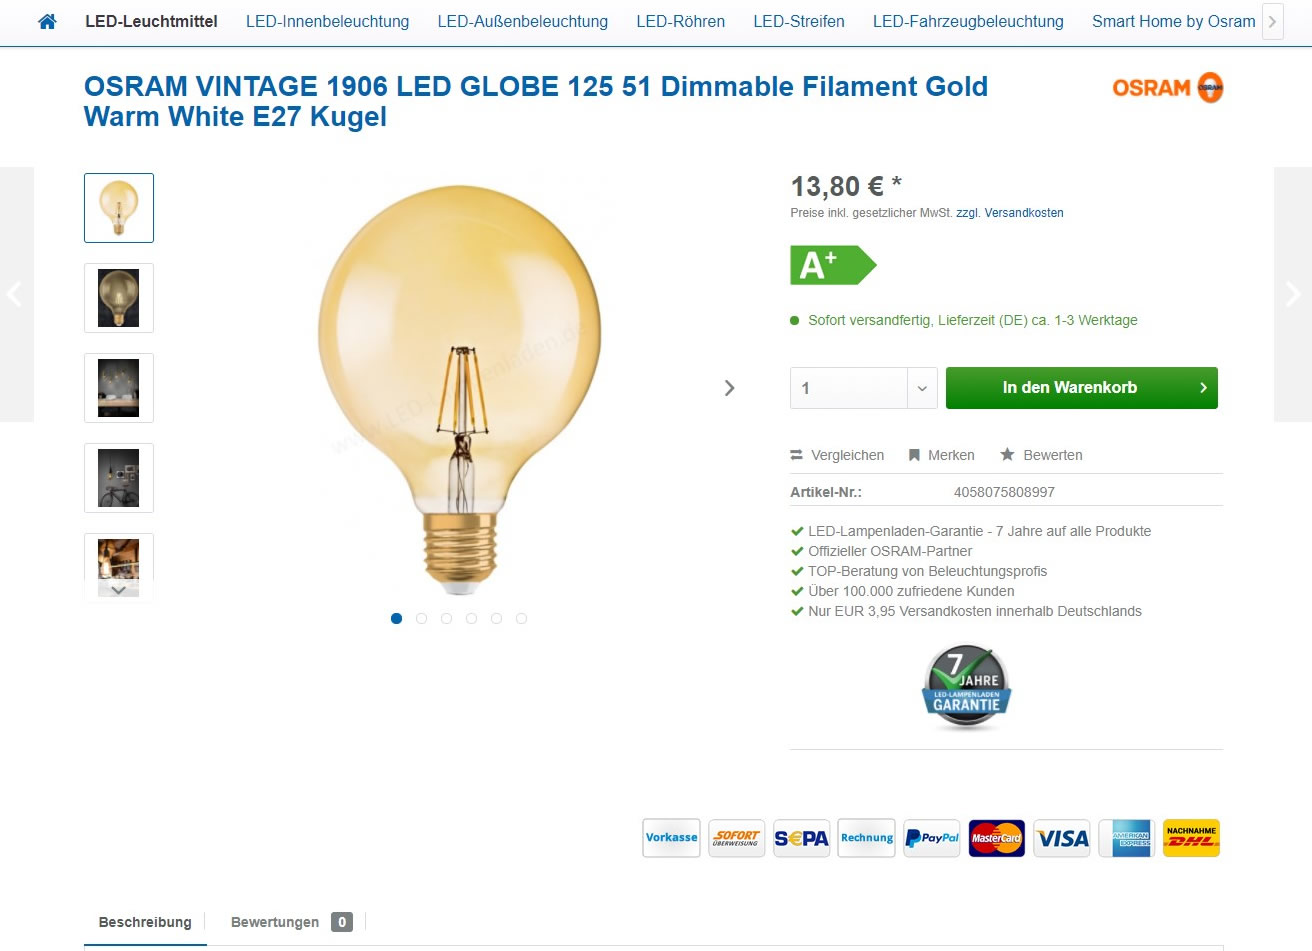 Mansion Utrolig Uberettiget led-lampenladen.de | Referenz – webfellows Shopware Agentur